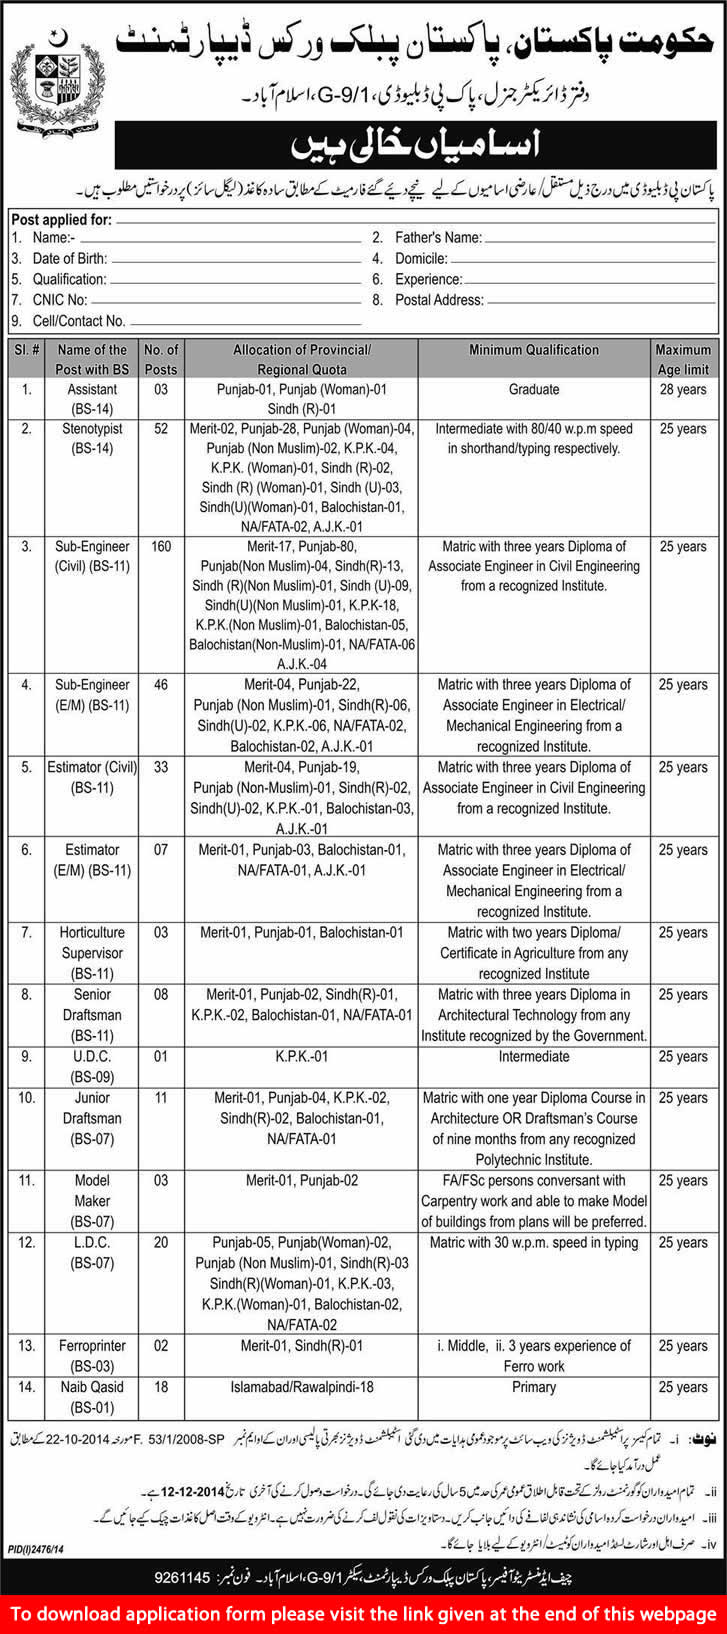 Pakistan Public Works Department Jobs 2014 November Application Form Download Latest / New